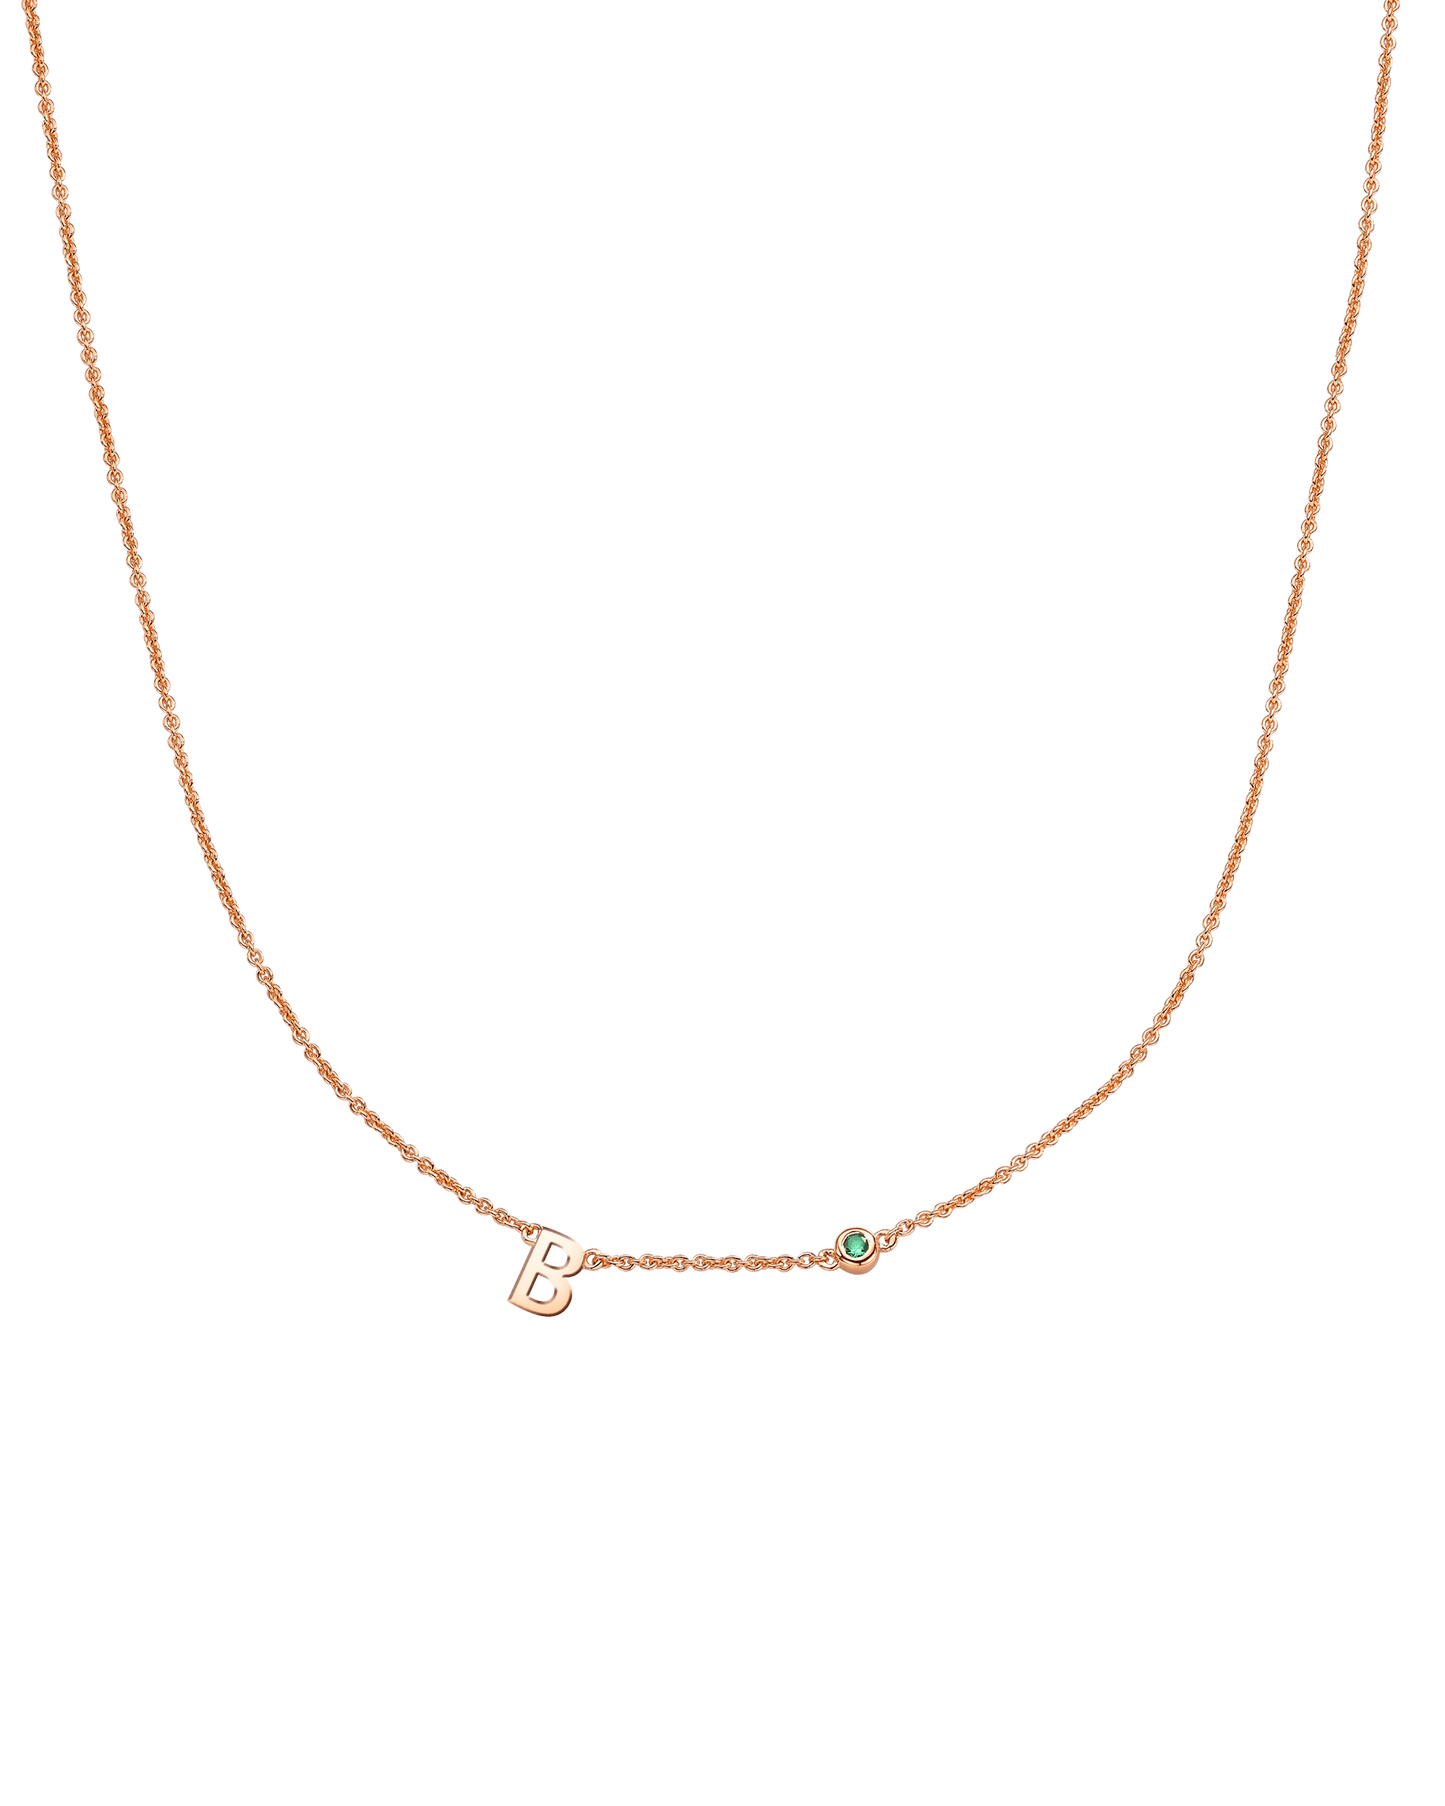 Initial Birthstone Necklace - 18K Rose Vermeil Necklaces magal-dev 1 Initial + 1 Birthstone Adjustable 16-17" (40cm-43cm) 